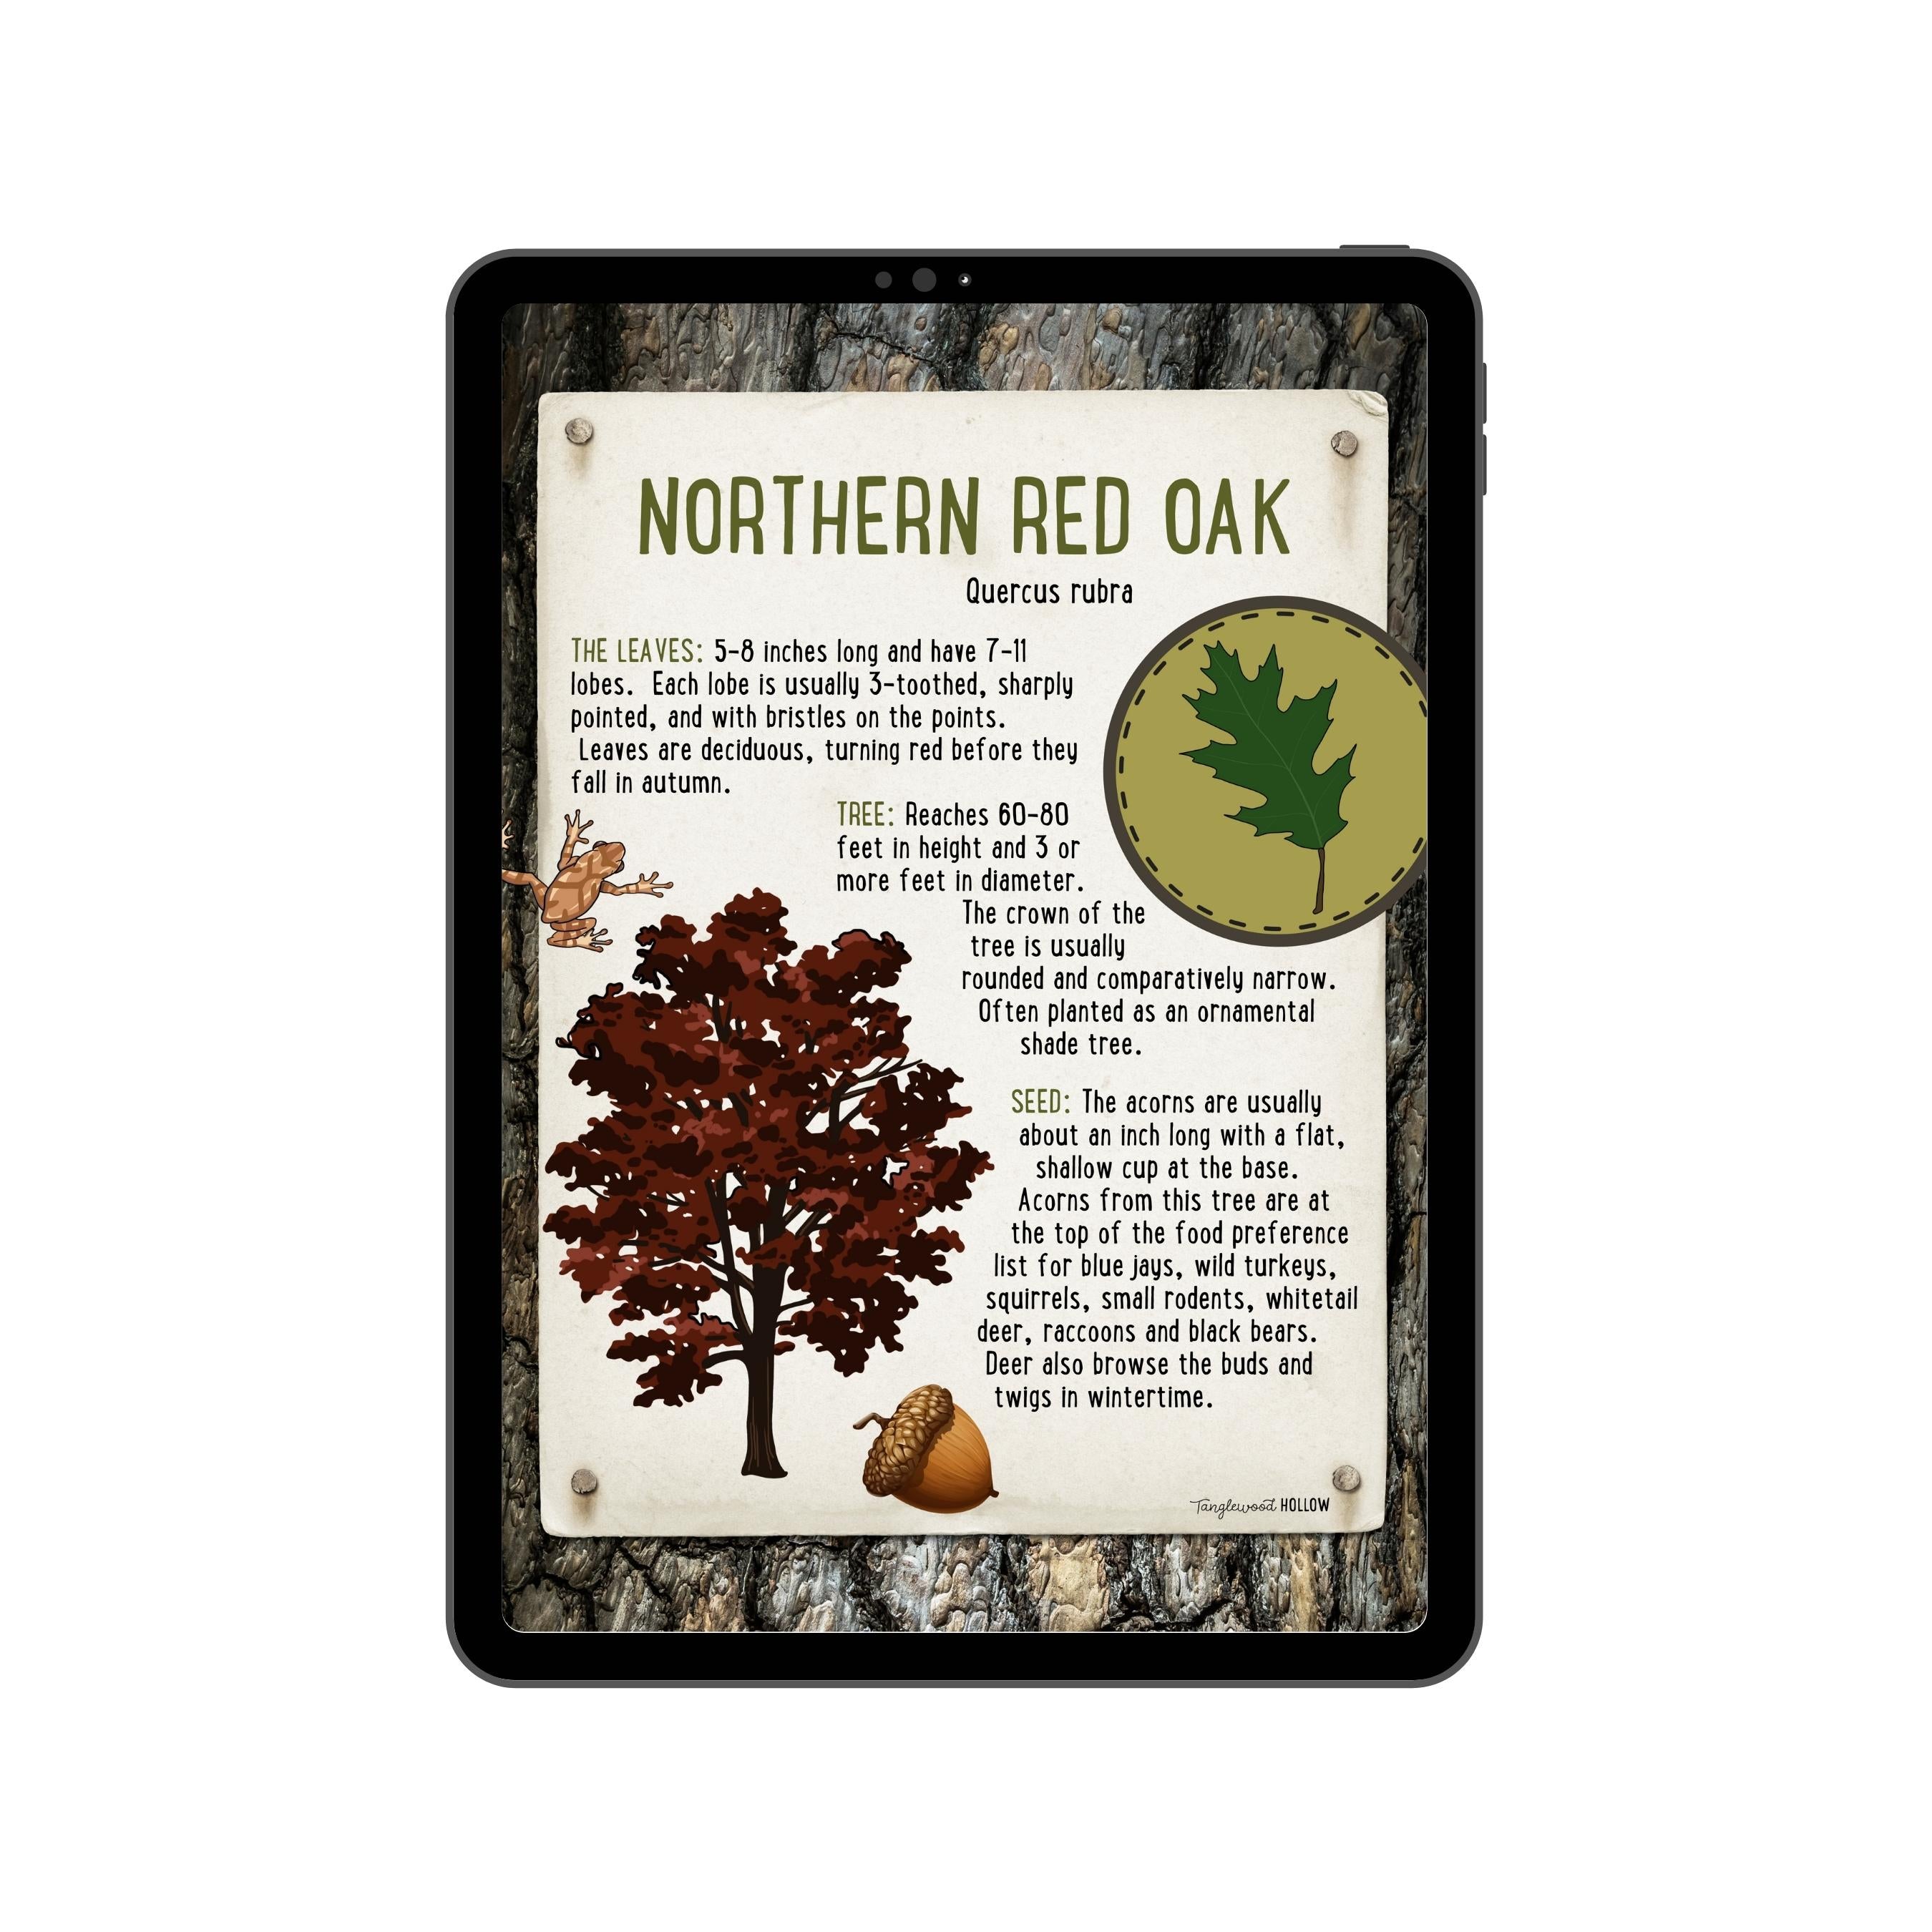 Exploring Northern Red Oak - A Digital Guide